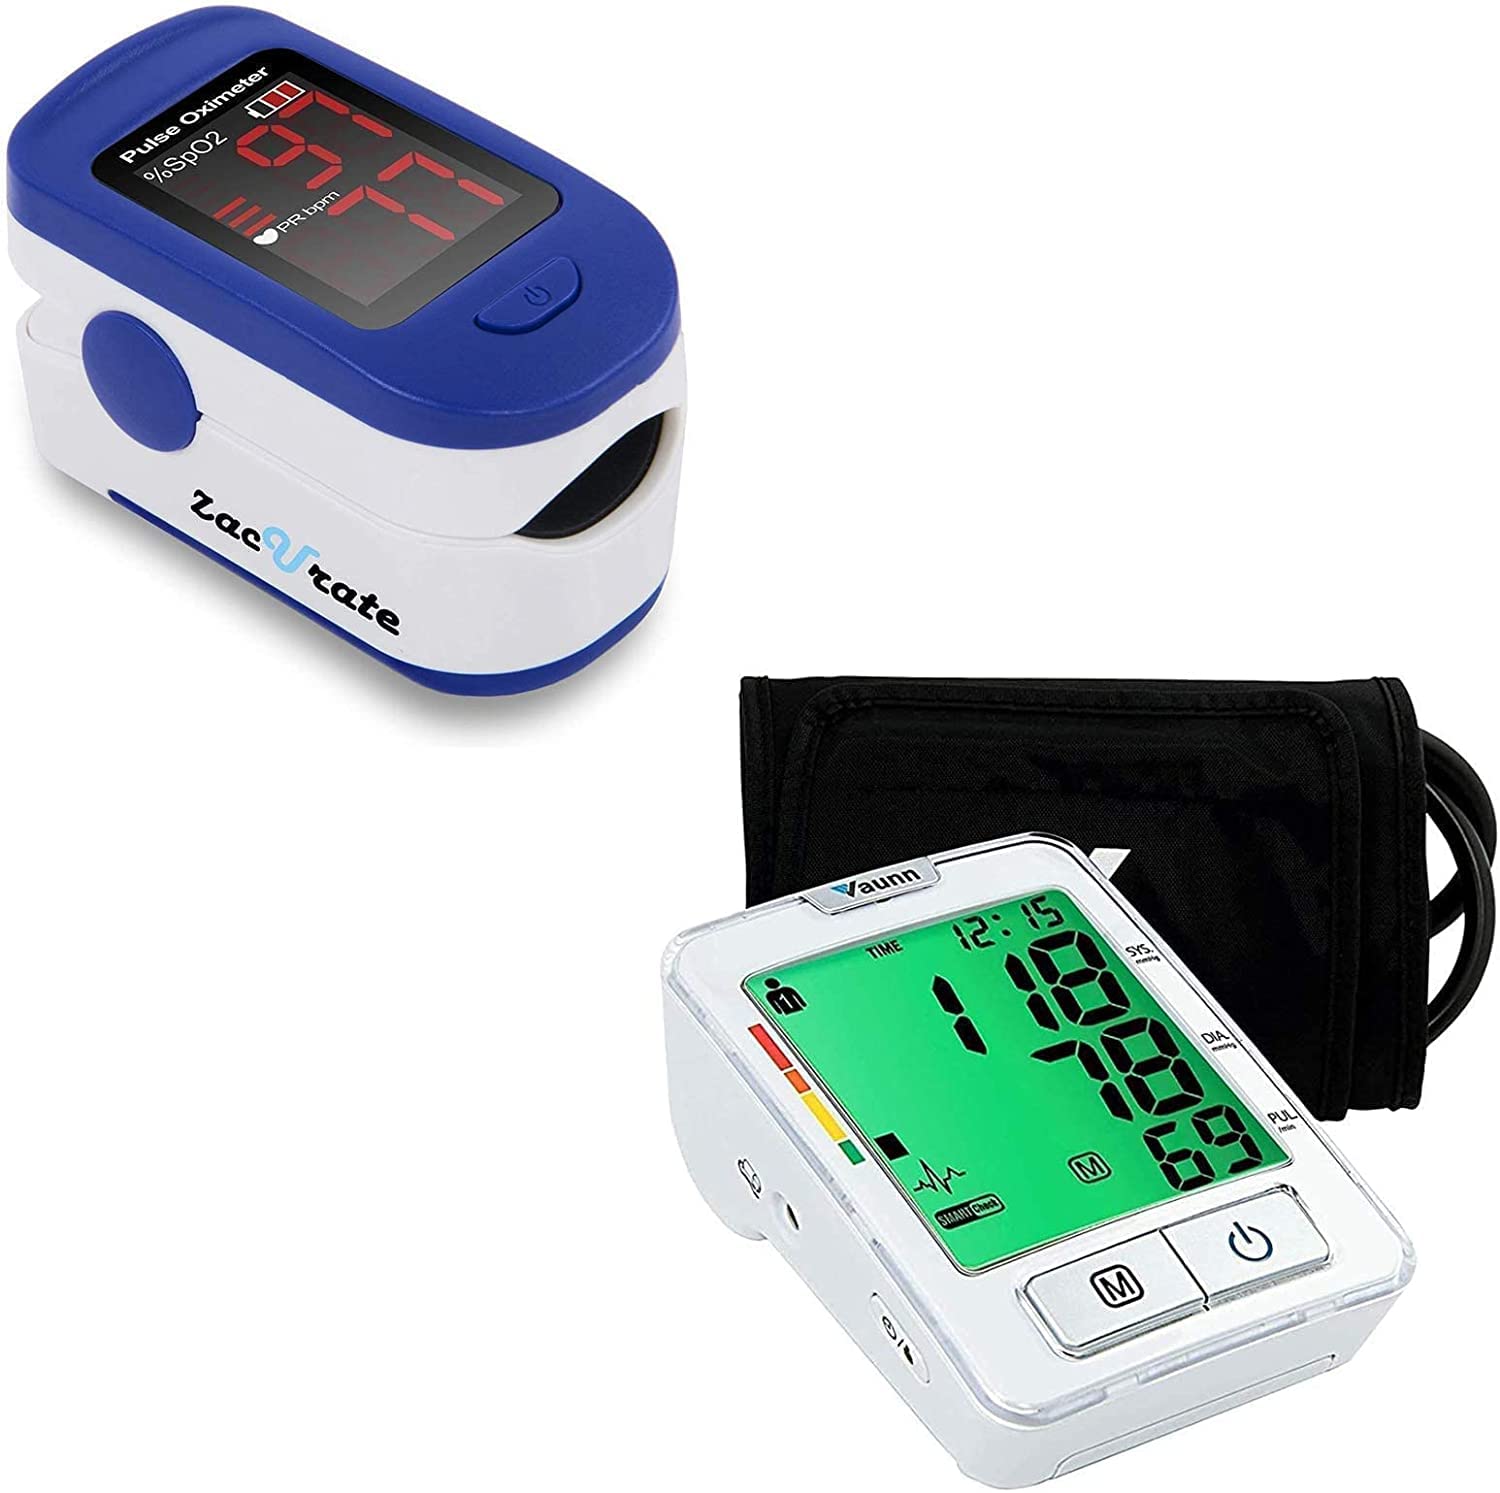 Zacurate 500BL Fingertip Pulse Oximeter and Vaunn Blood Pressure Monitor Machine Bundle